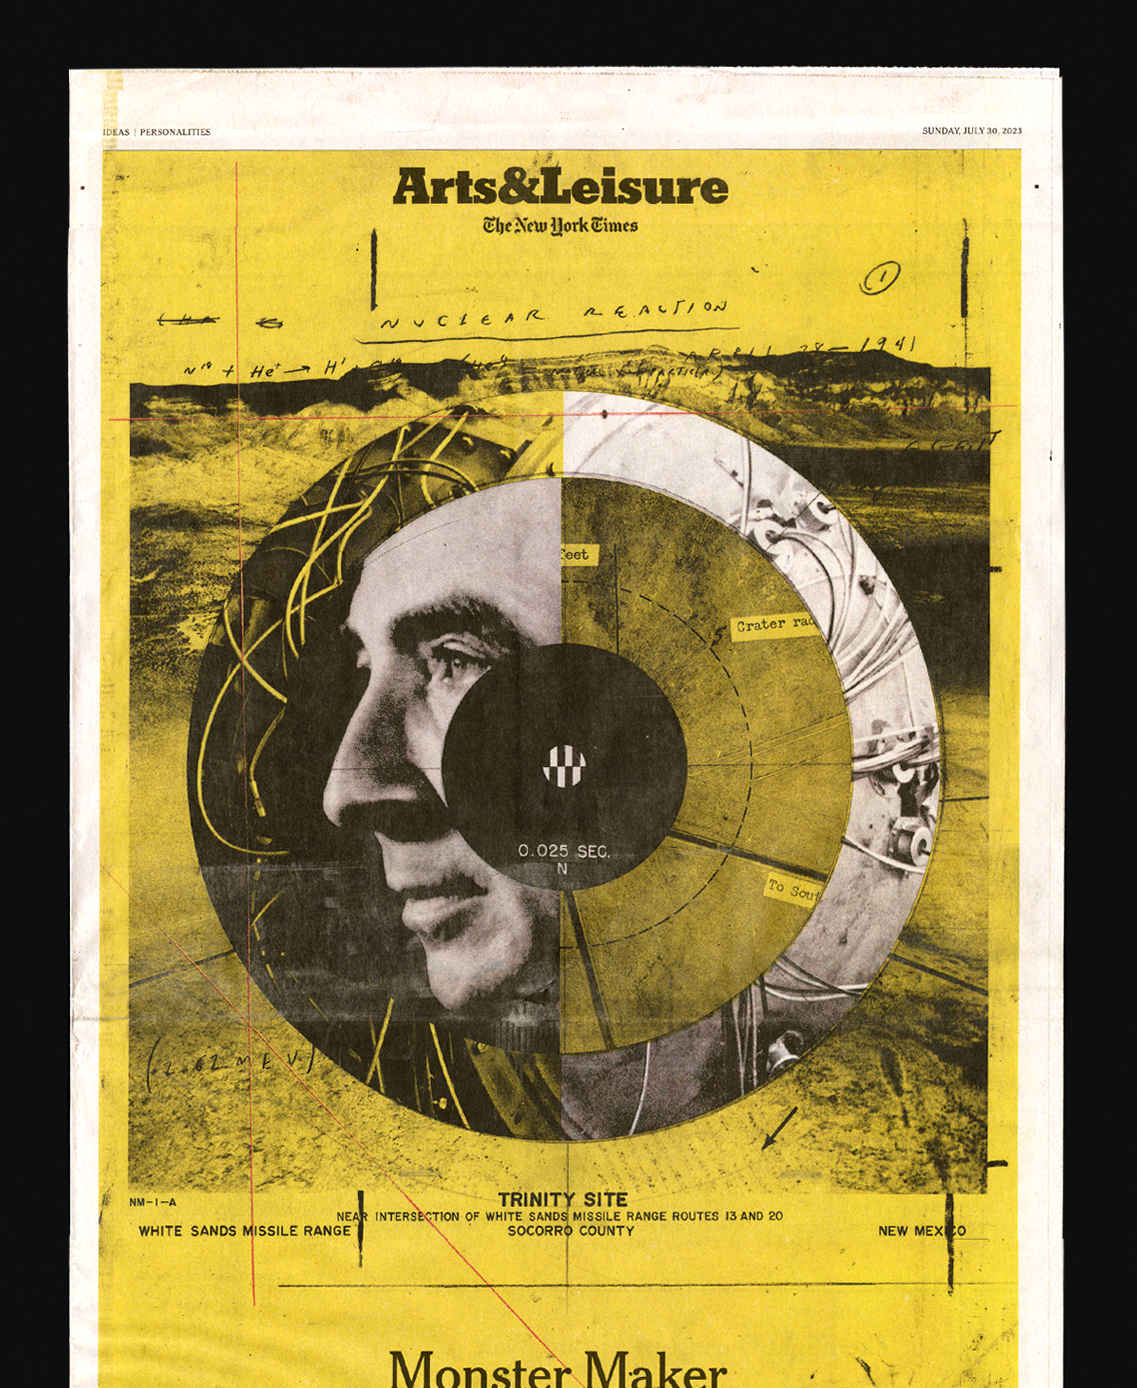 The New York Times - Arts & Leisure Cover — McQuade Inc